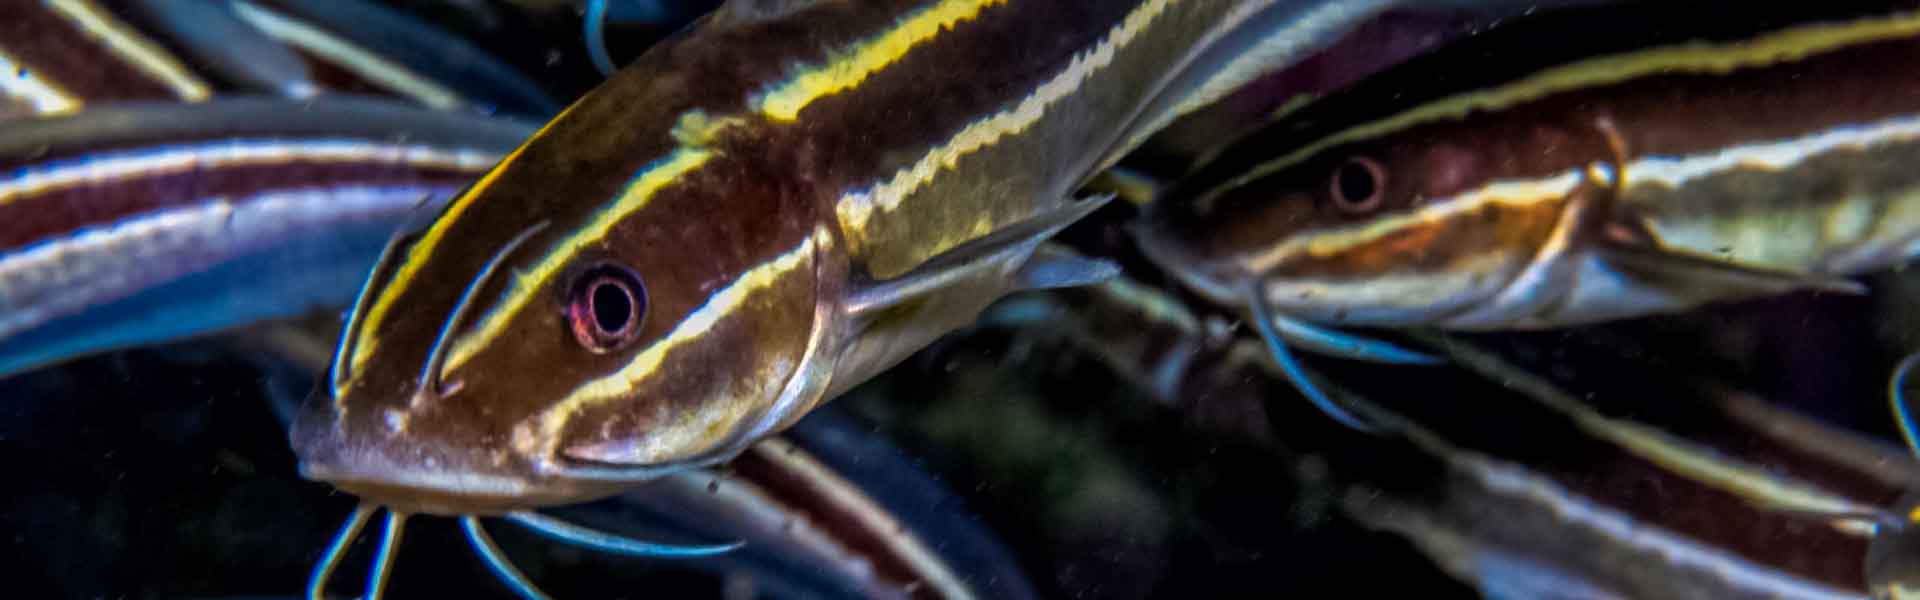 The Striped Eel Catfish